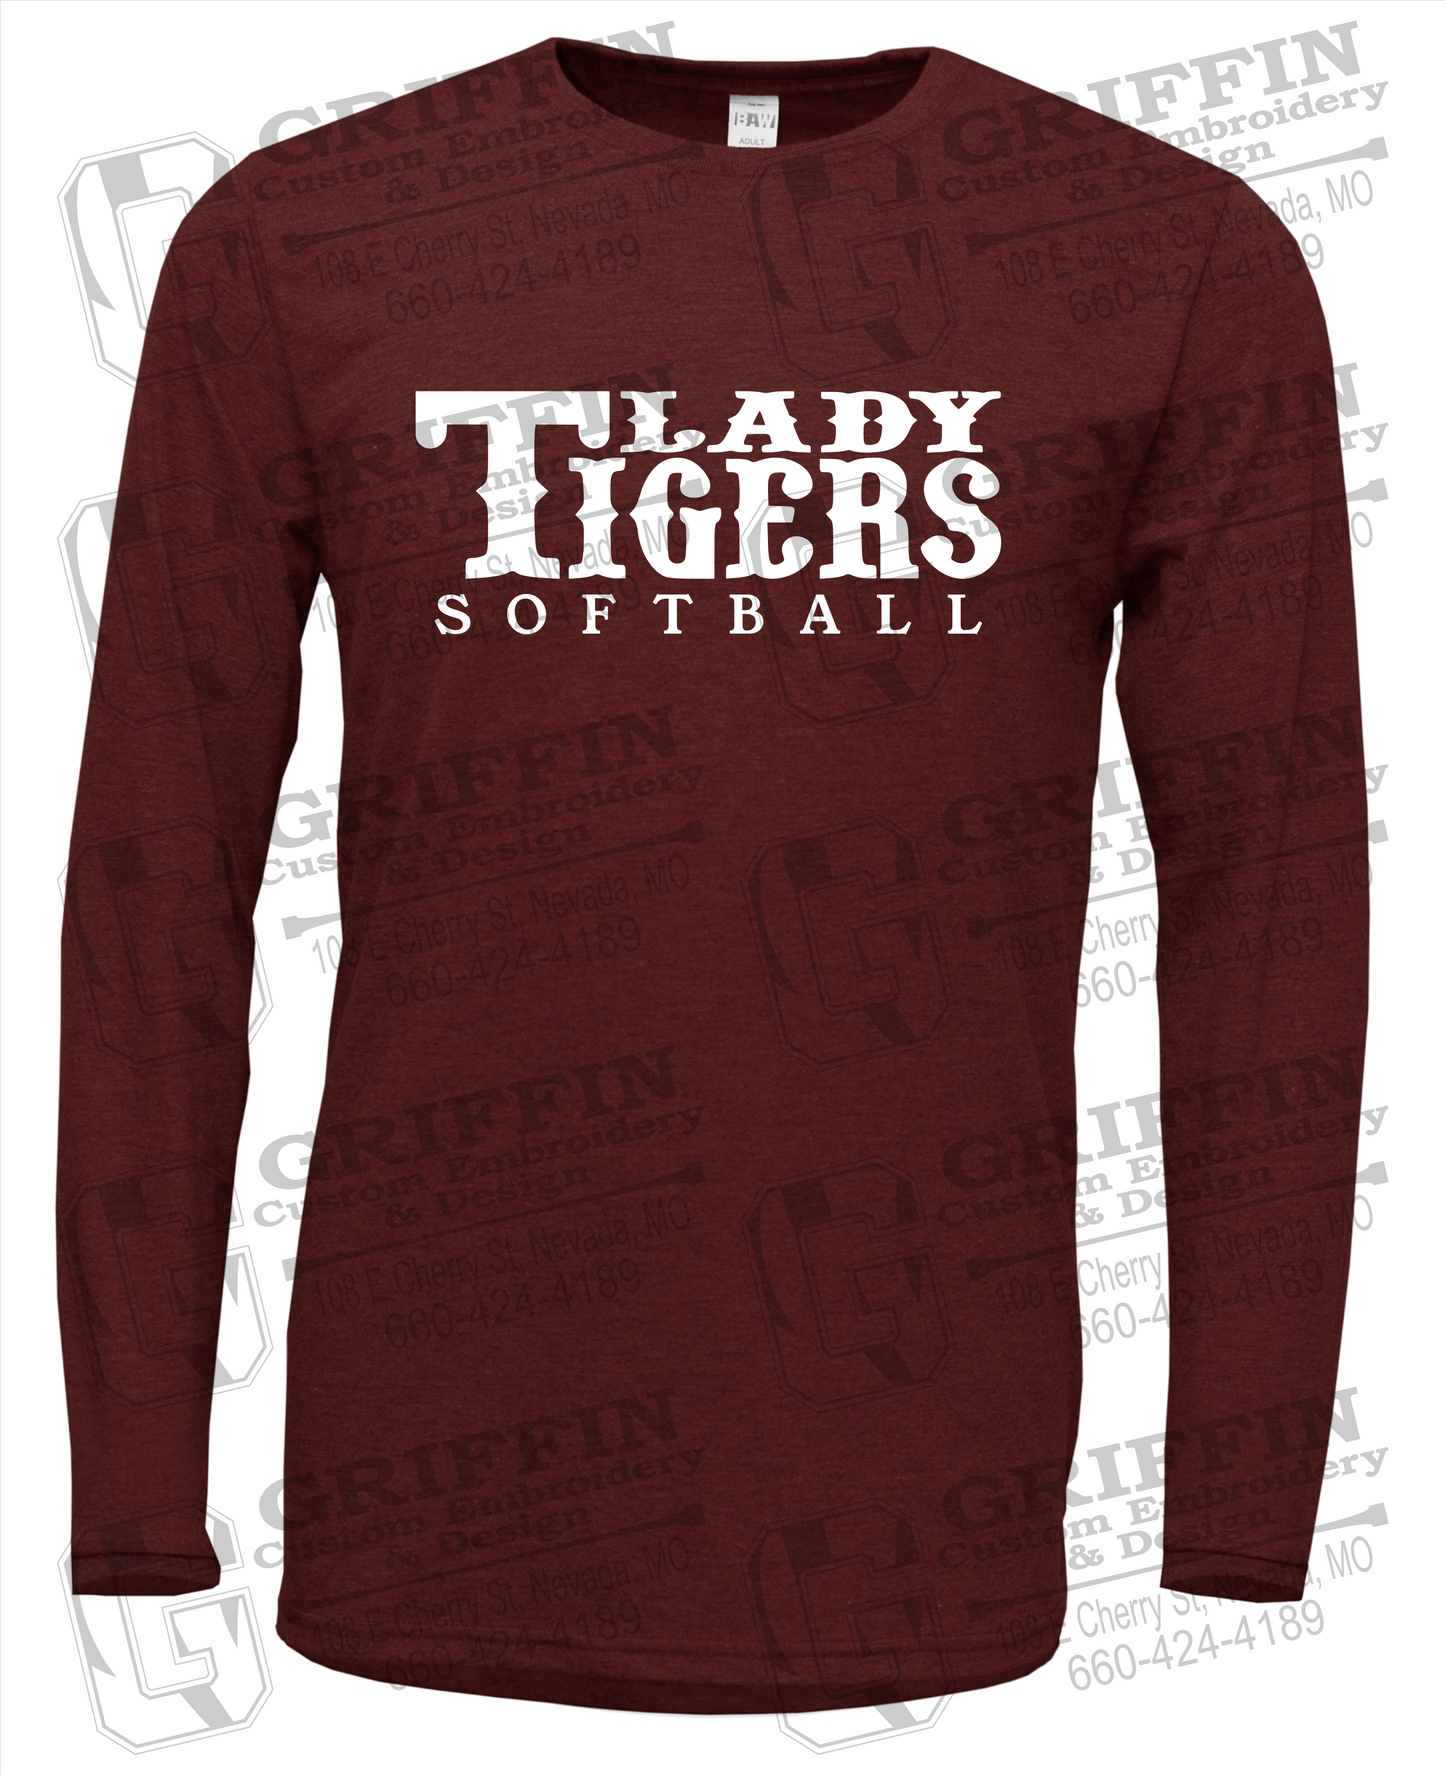 Nevada Tigers 24-F Long Sleeve T-Shirt - Softball